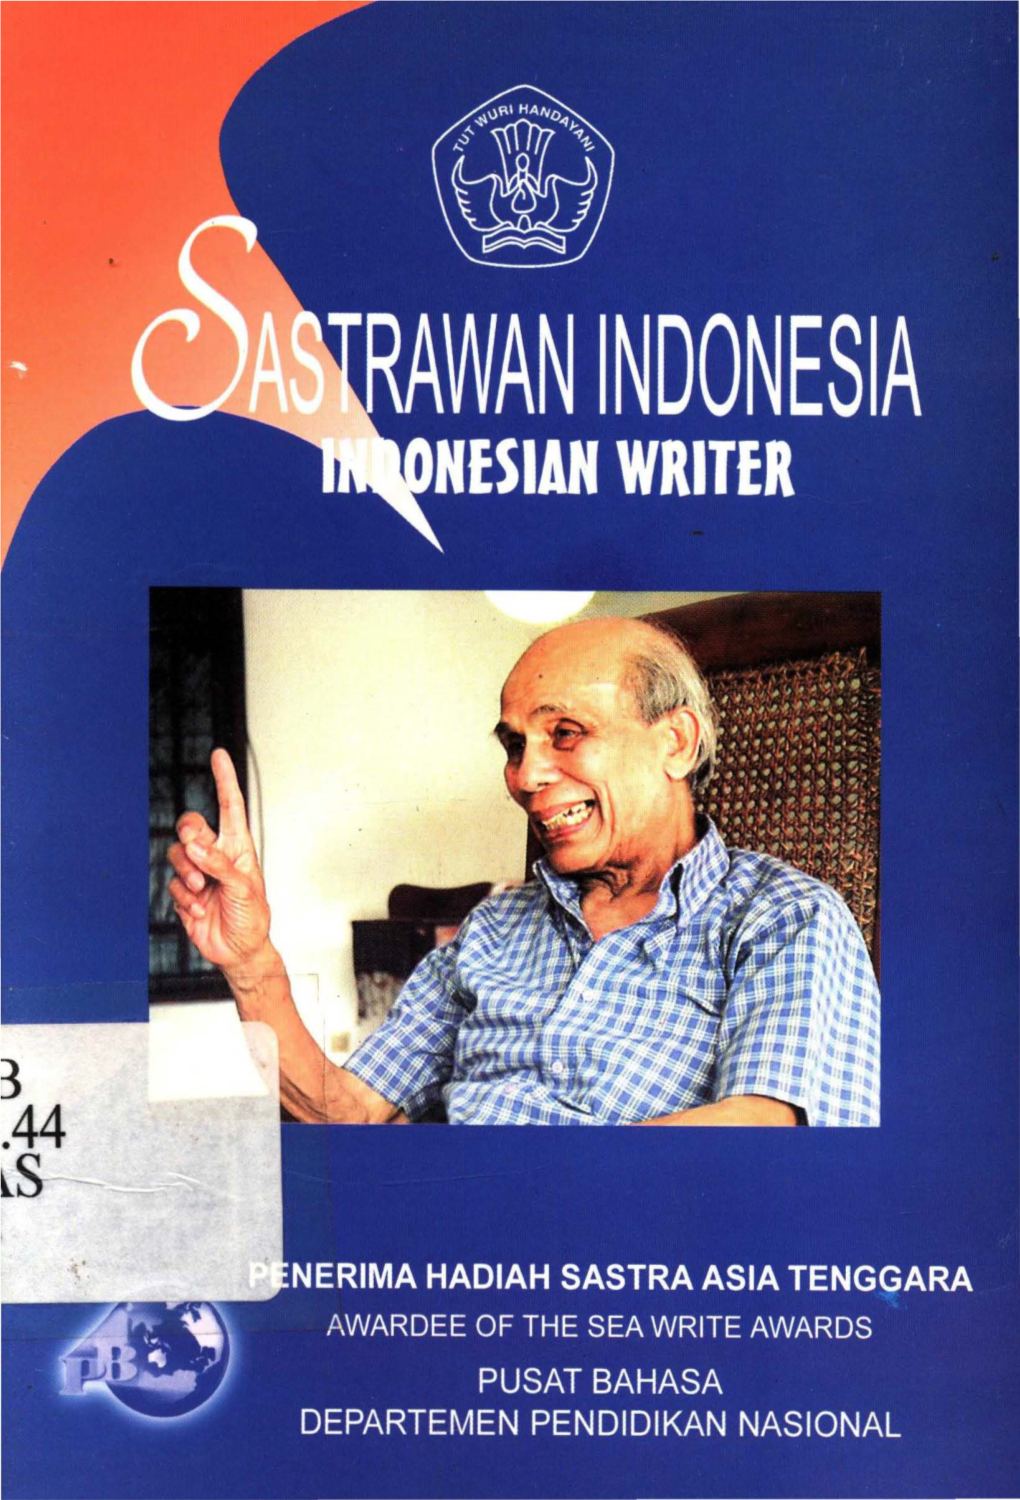 SITOR SITUMORANG Pcnerima Hadiah Sastra Asia Tenggara 2006 Awardee of the S.E.A